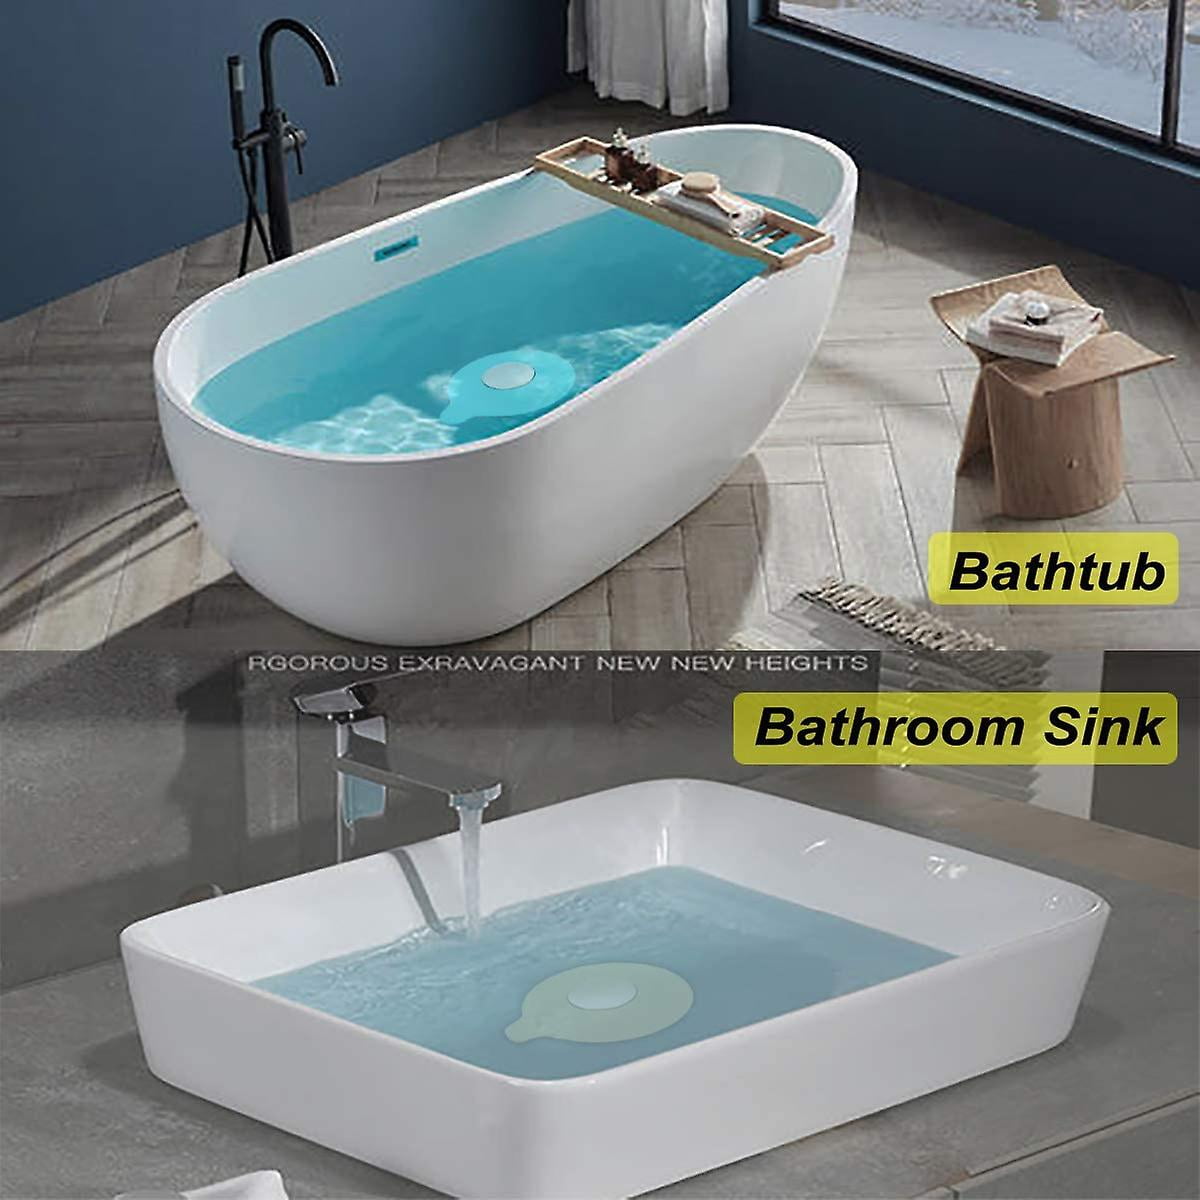 Almi 2pcs Bathtub Drain Strainer- Small Bathroom Sink Strainer